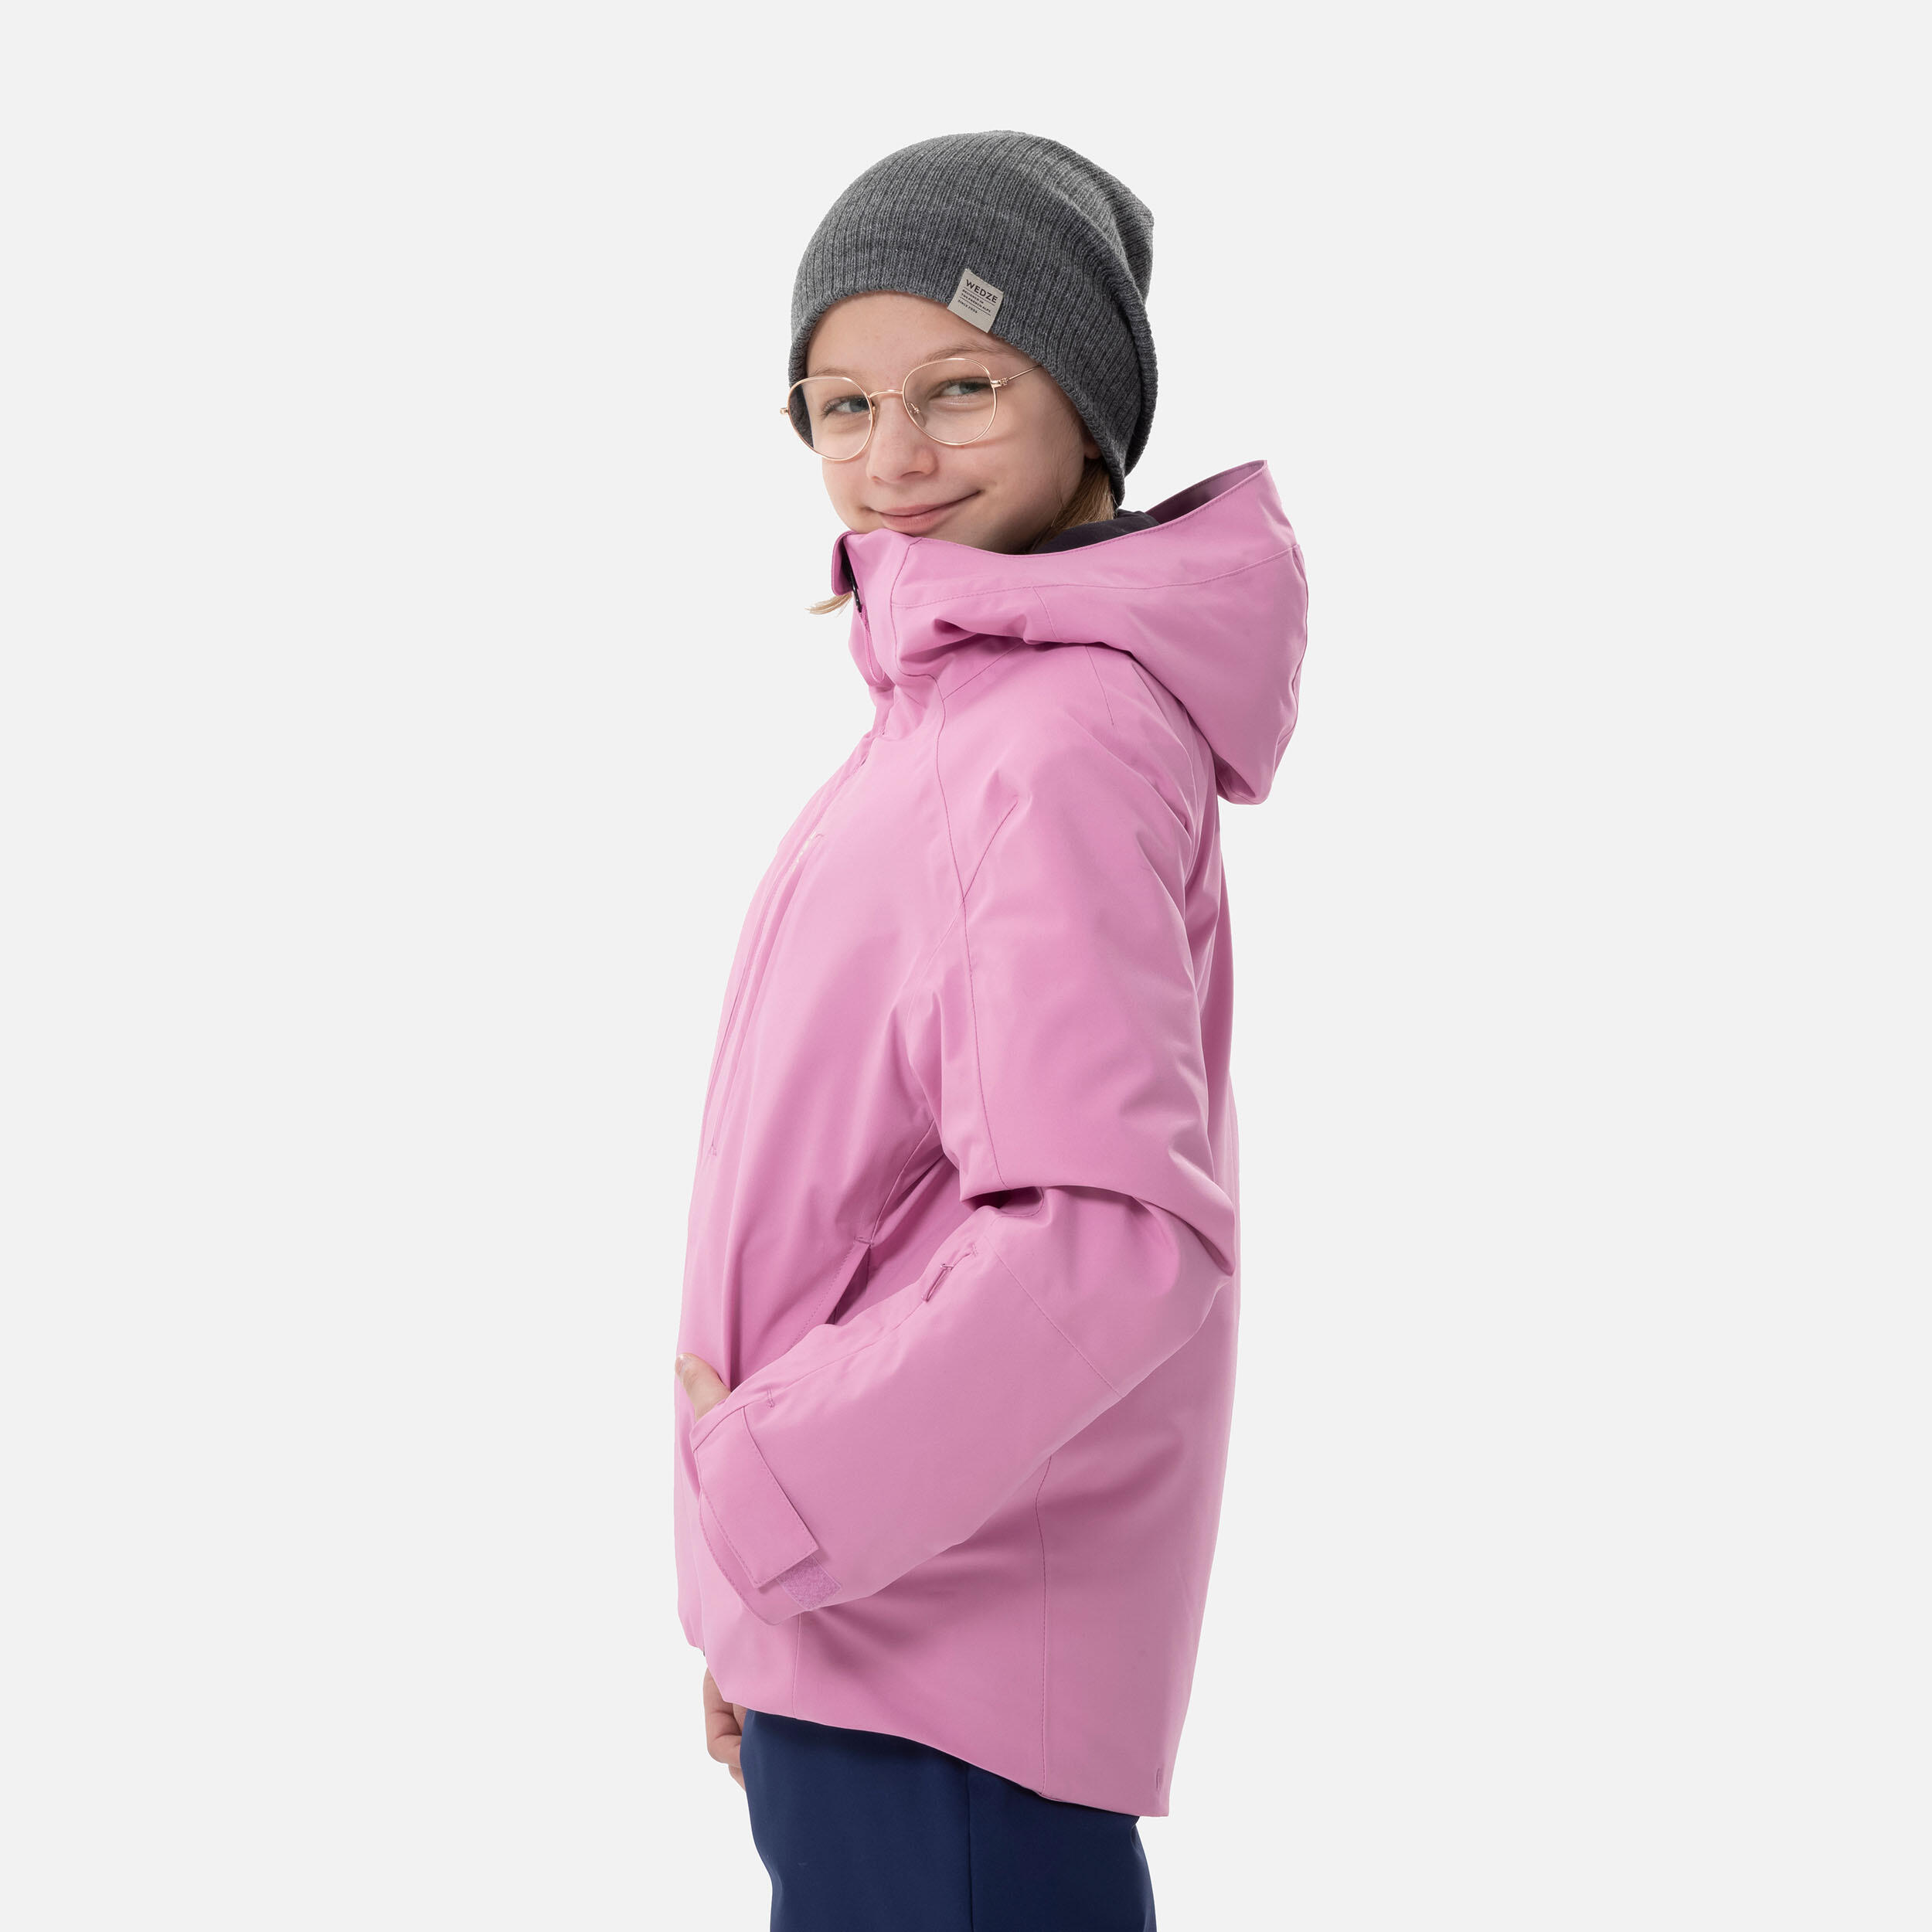 Kids’ Warm and Waterproof Ski Jacket 550 - Pink 12/20